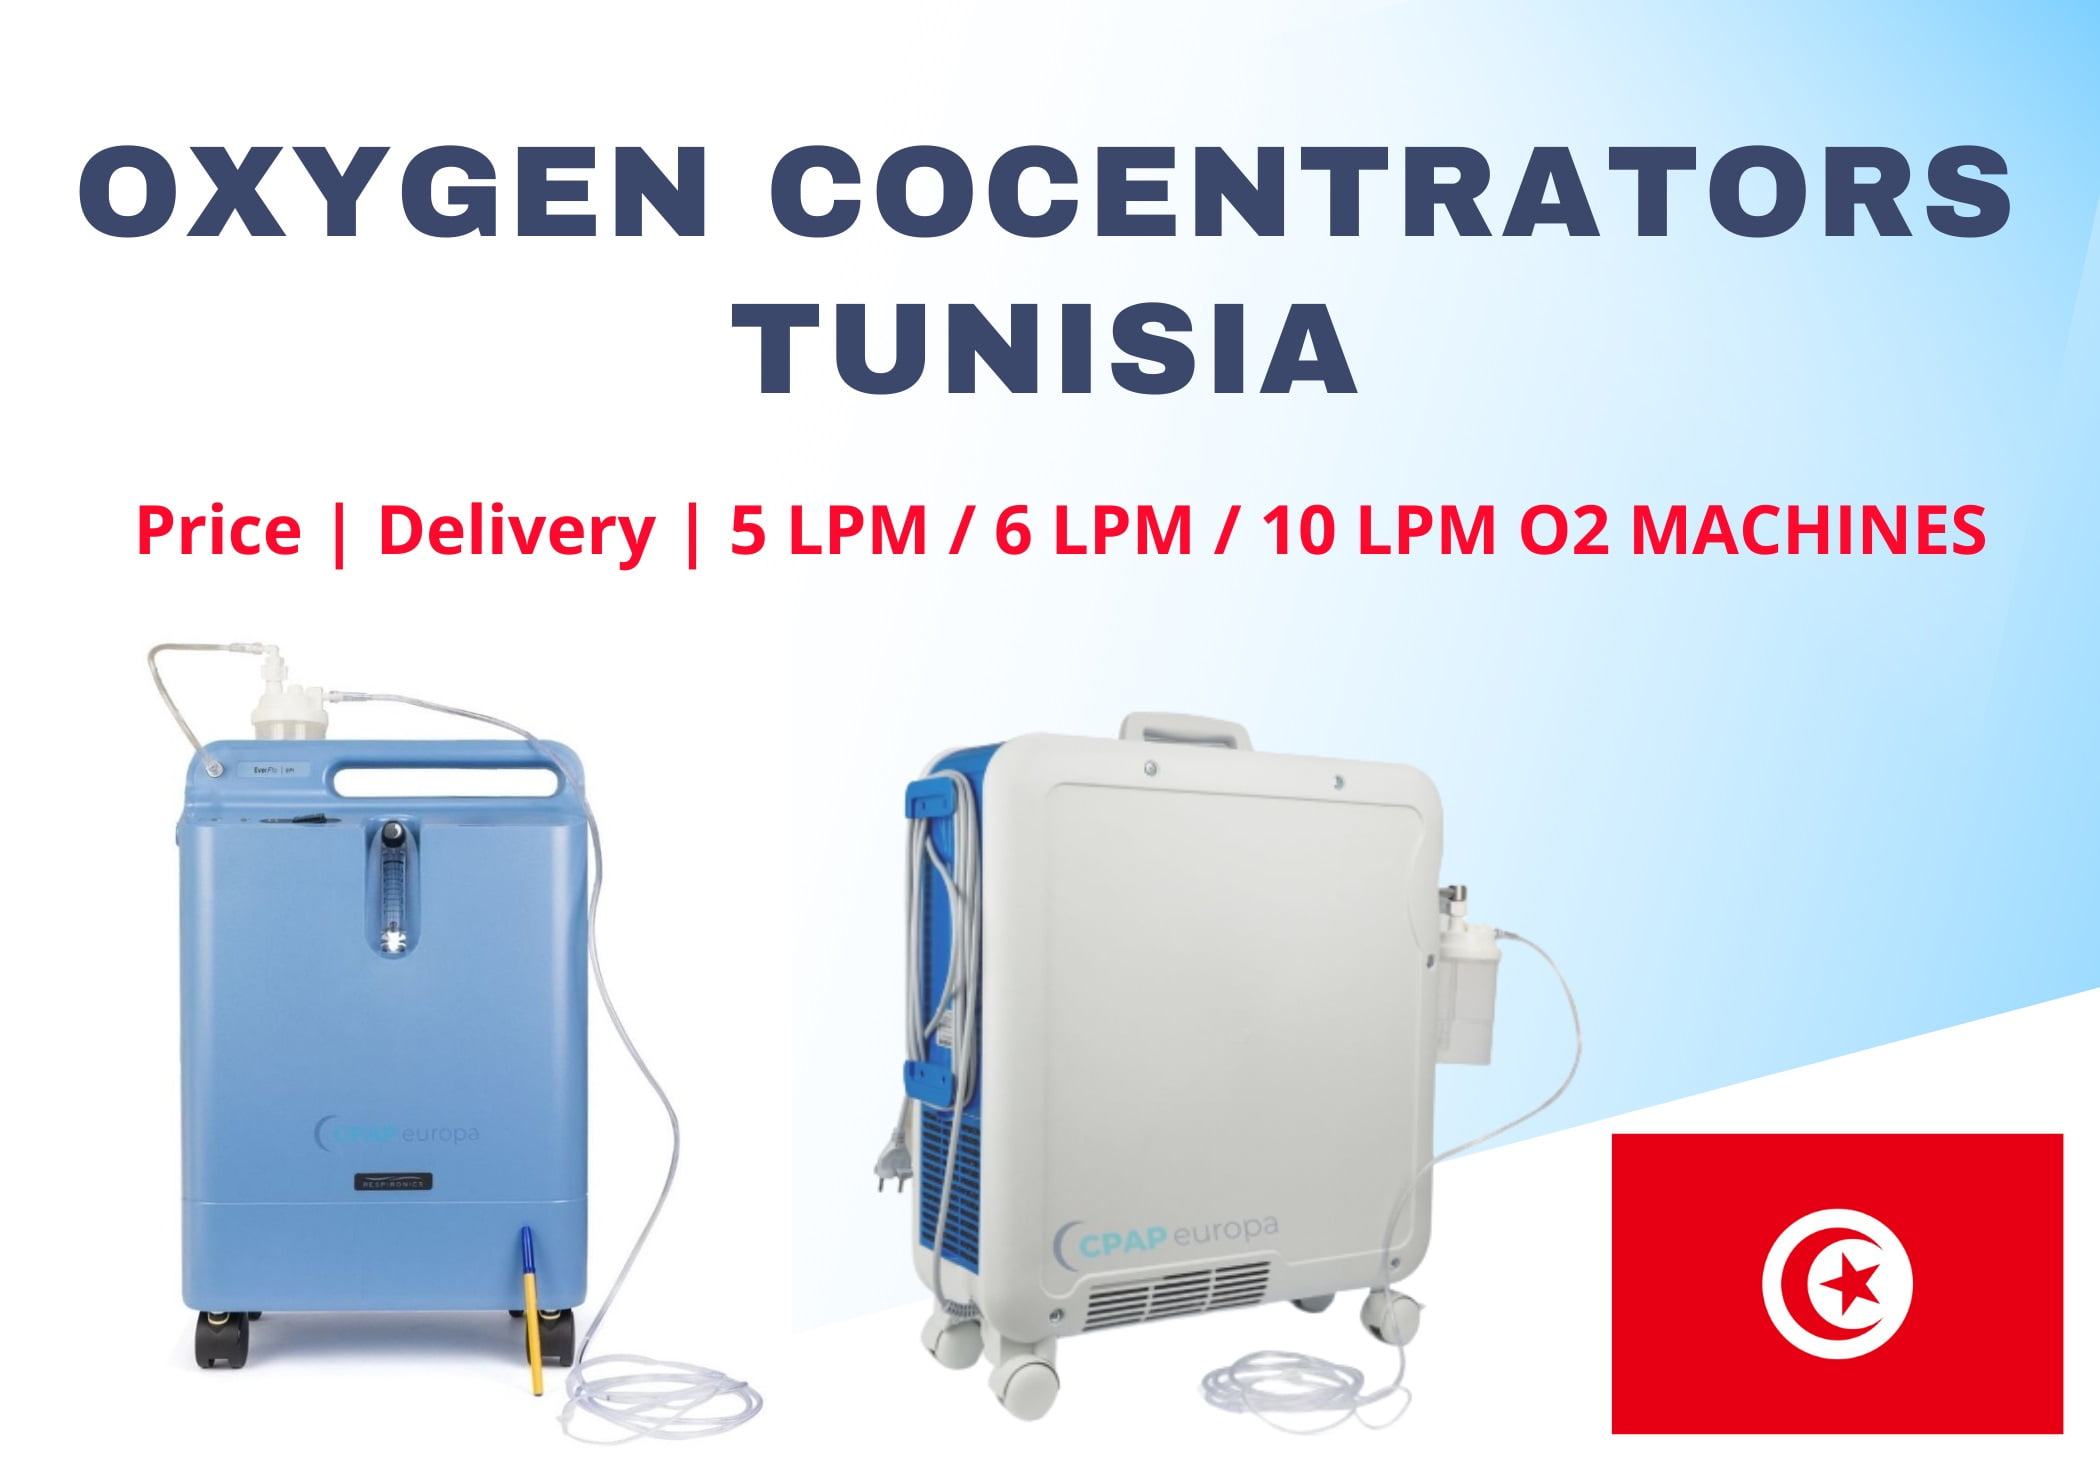 Oxygen concentrators Tunisia - Price & Delivery